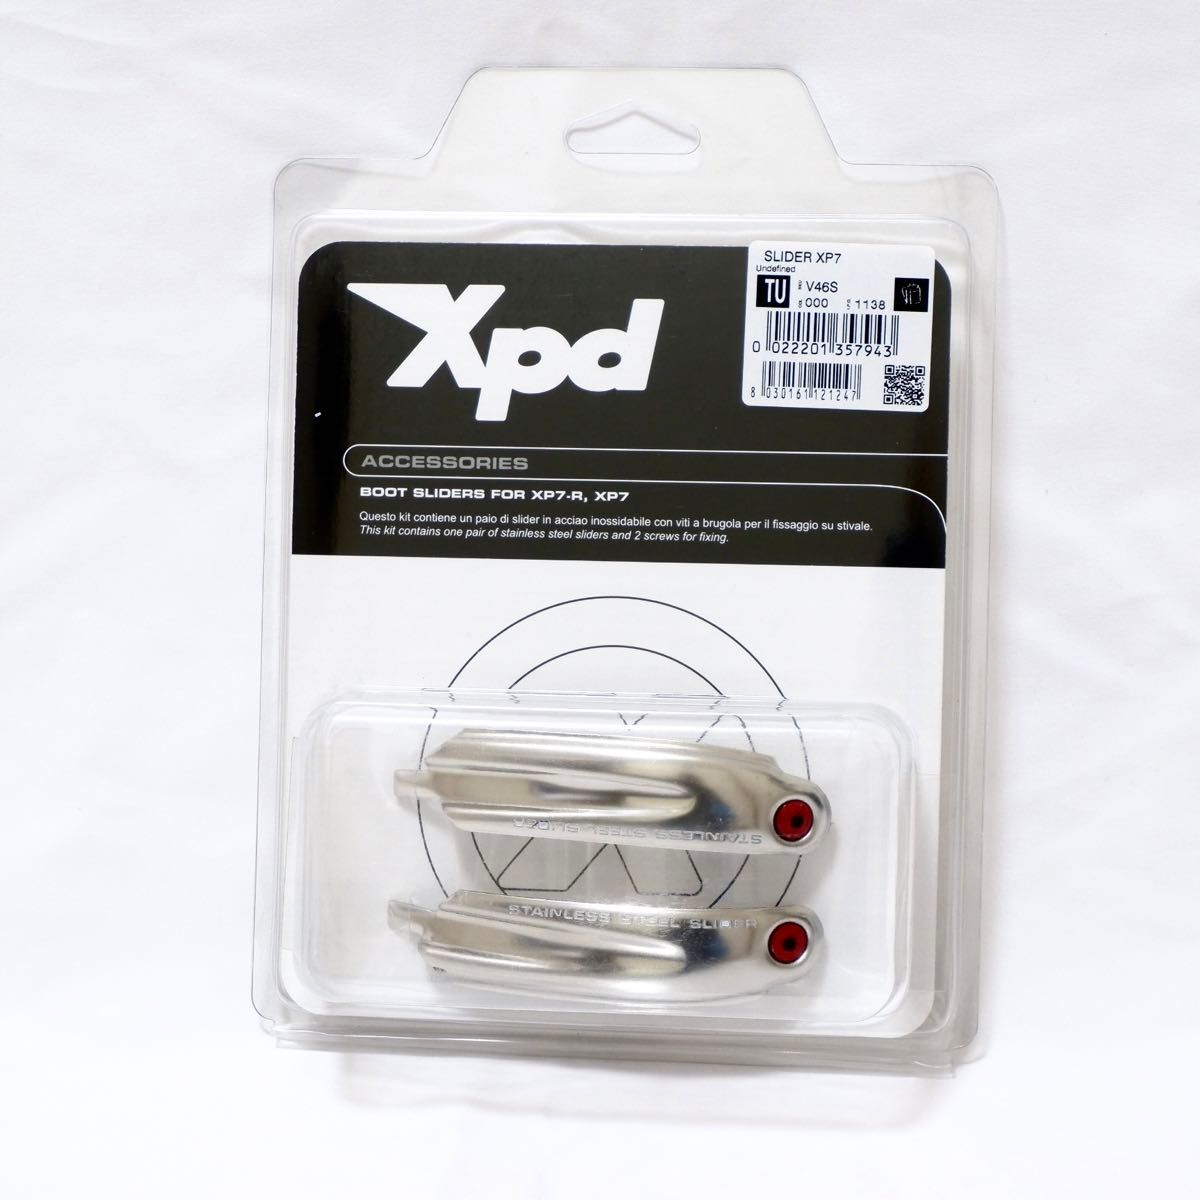 XPDトゥスライダー SLIDERXP7 V46S-000-TU #1